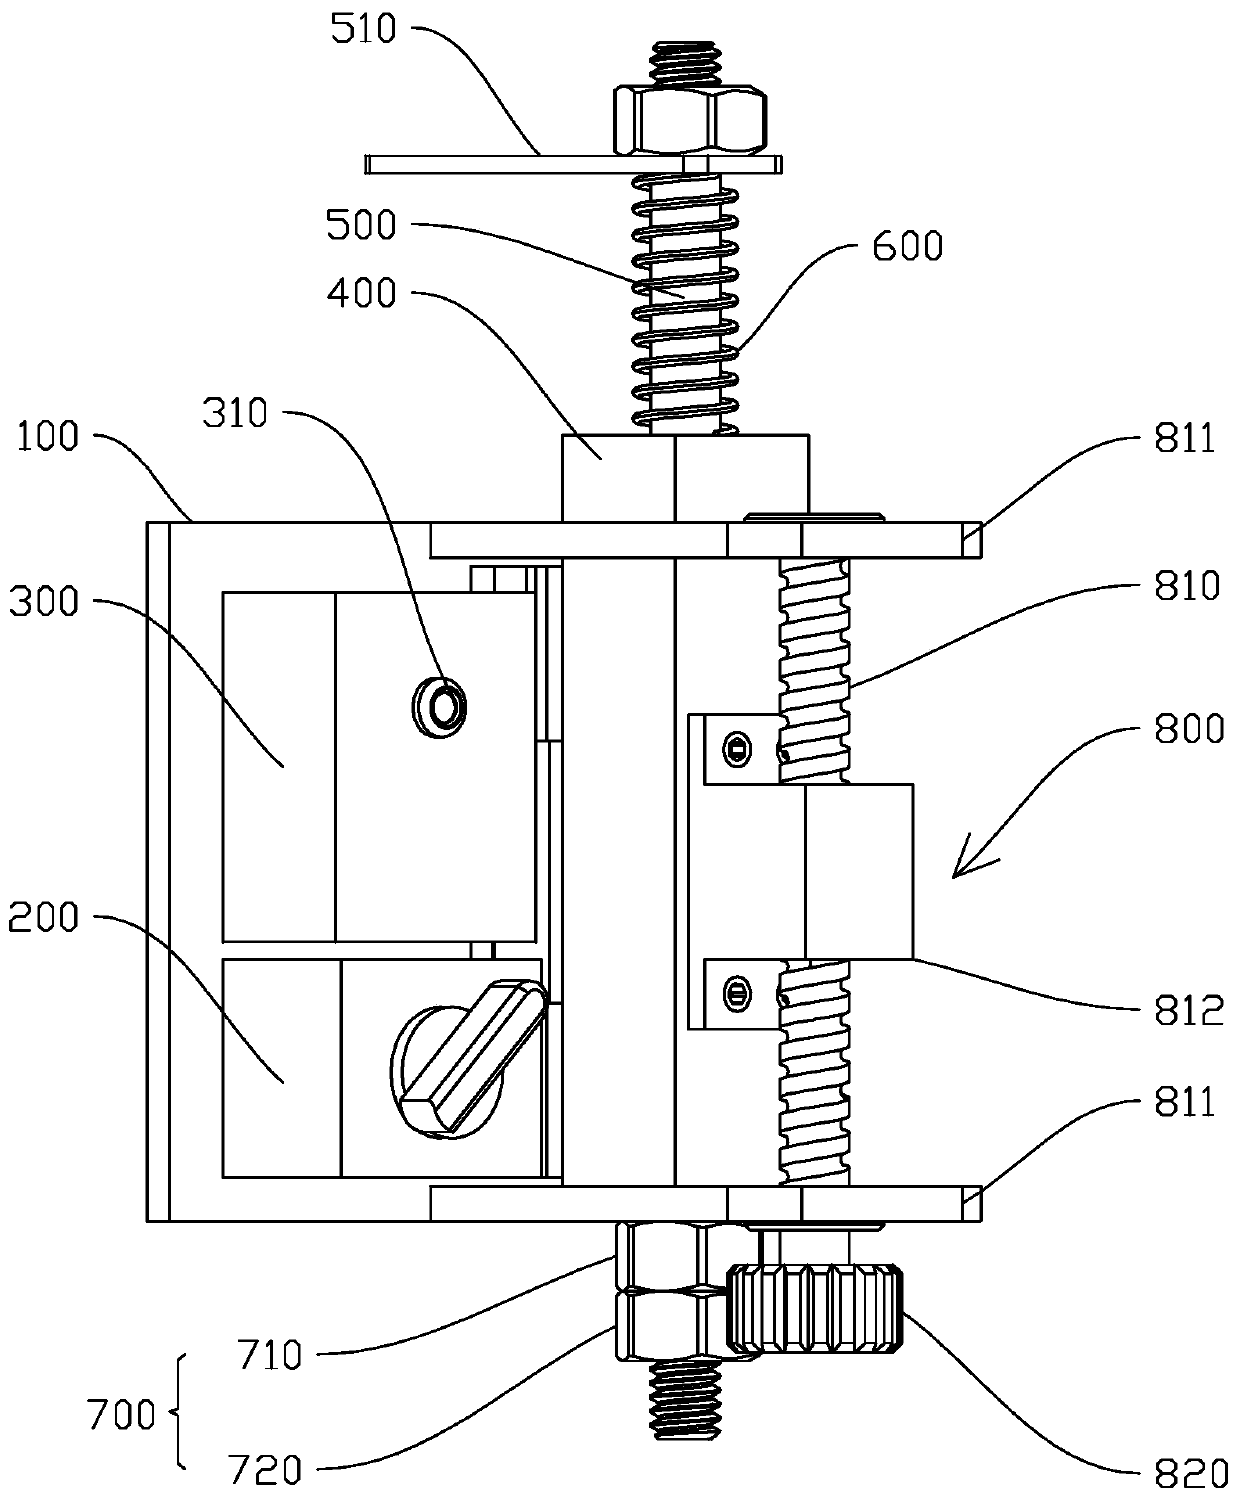 Elevator door lock meshing length measuring device and method